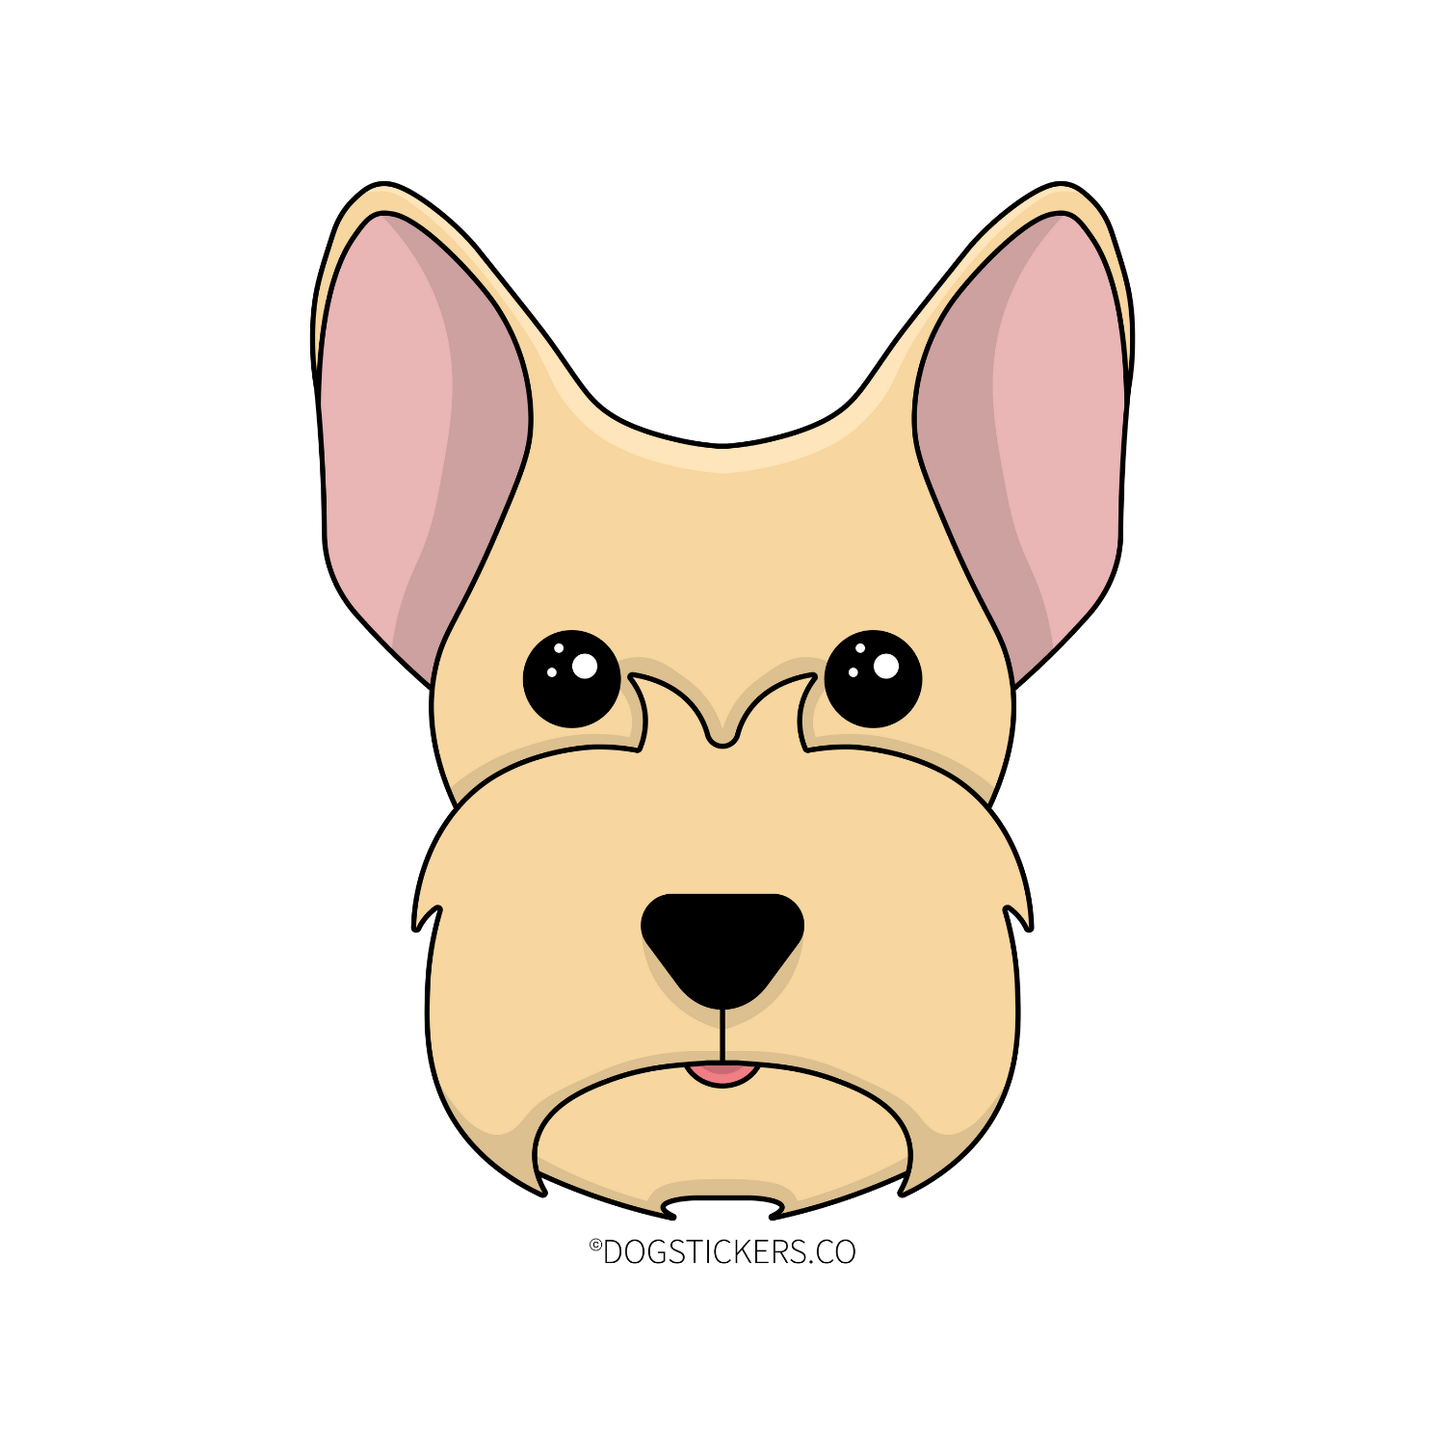 Scottish Terrier Sticker - Dogstickers.co